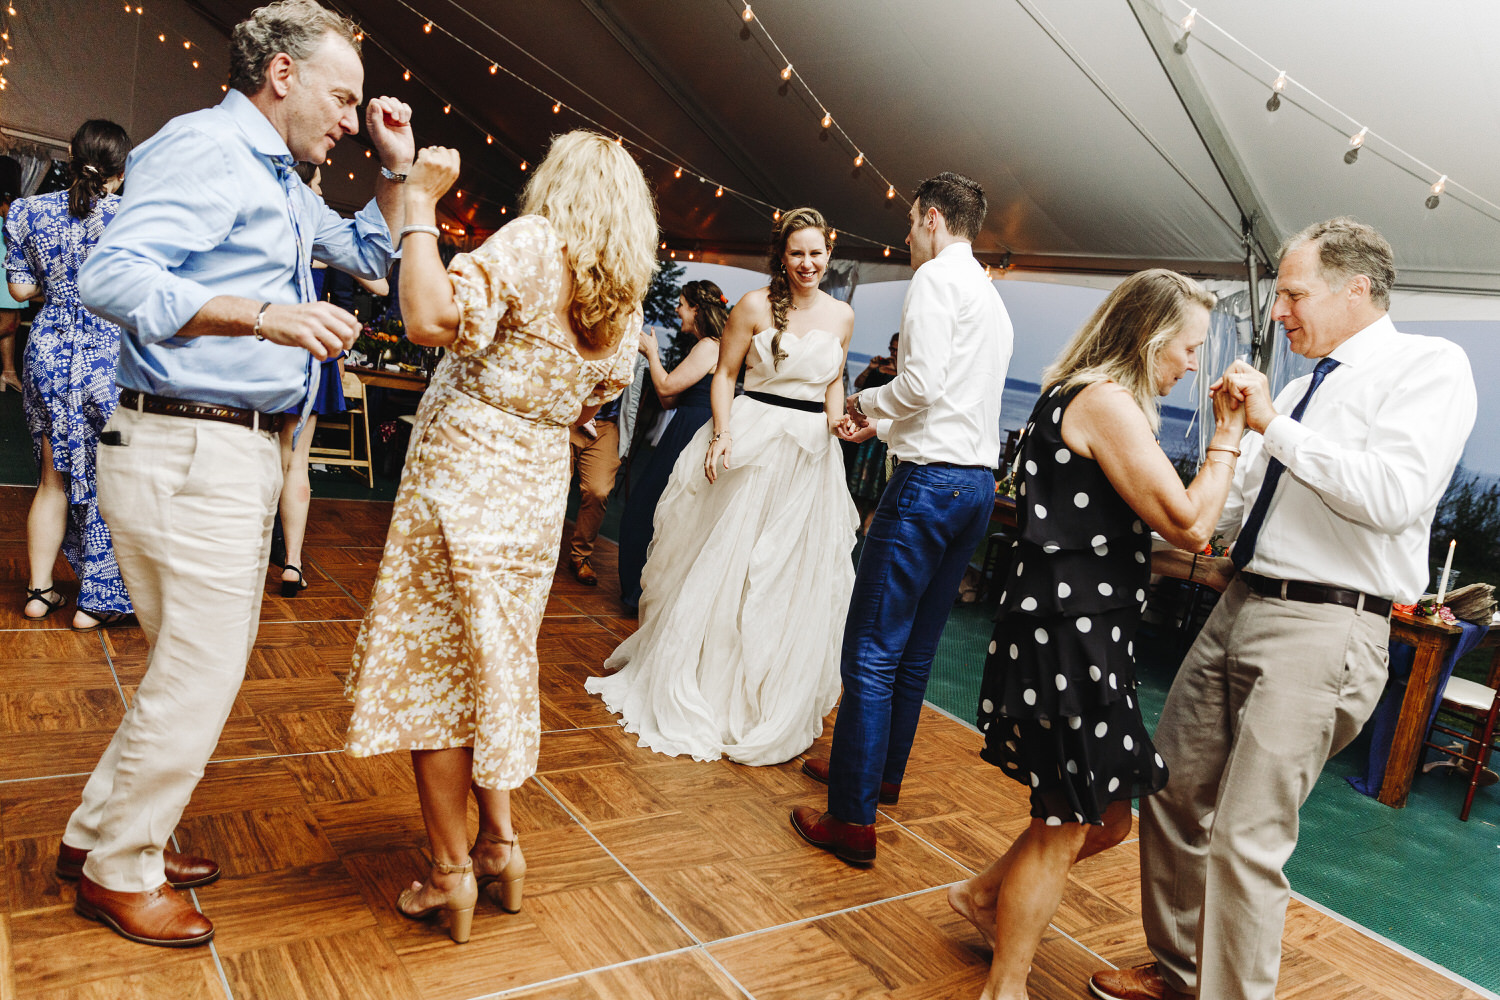 dance floor at wedding reception